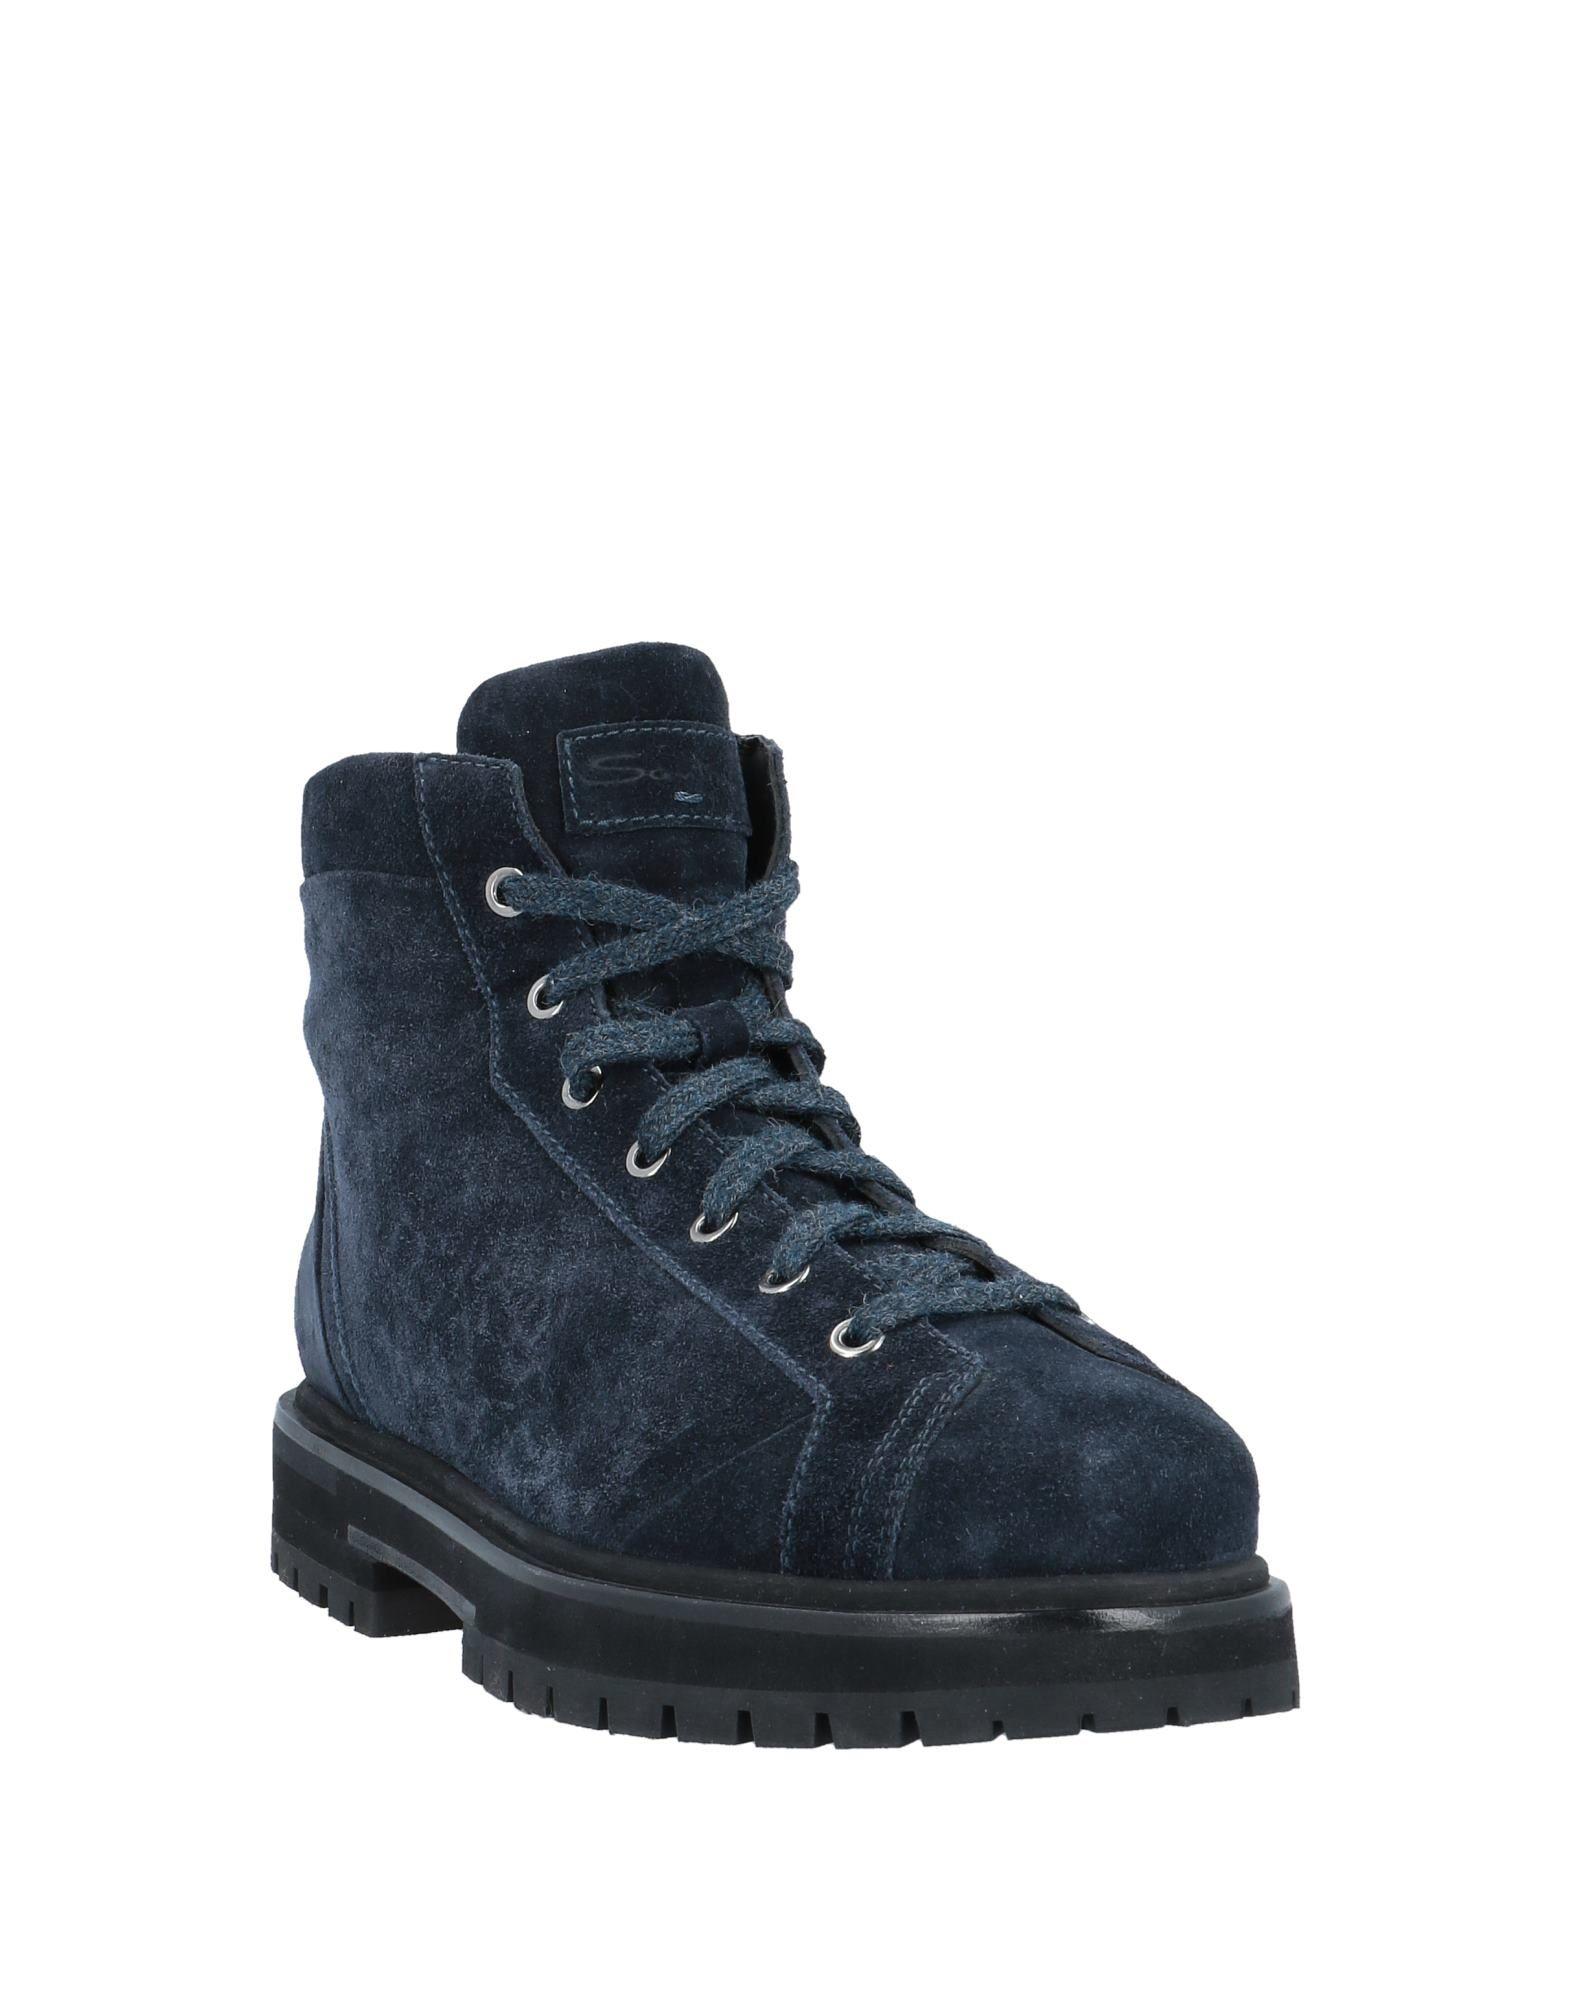 Santoni Suede Square Toe Boots in Dark Blue (Blue) for Men - Lyst